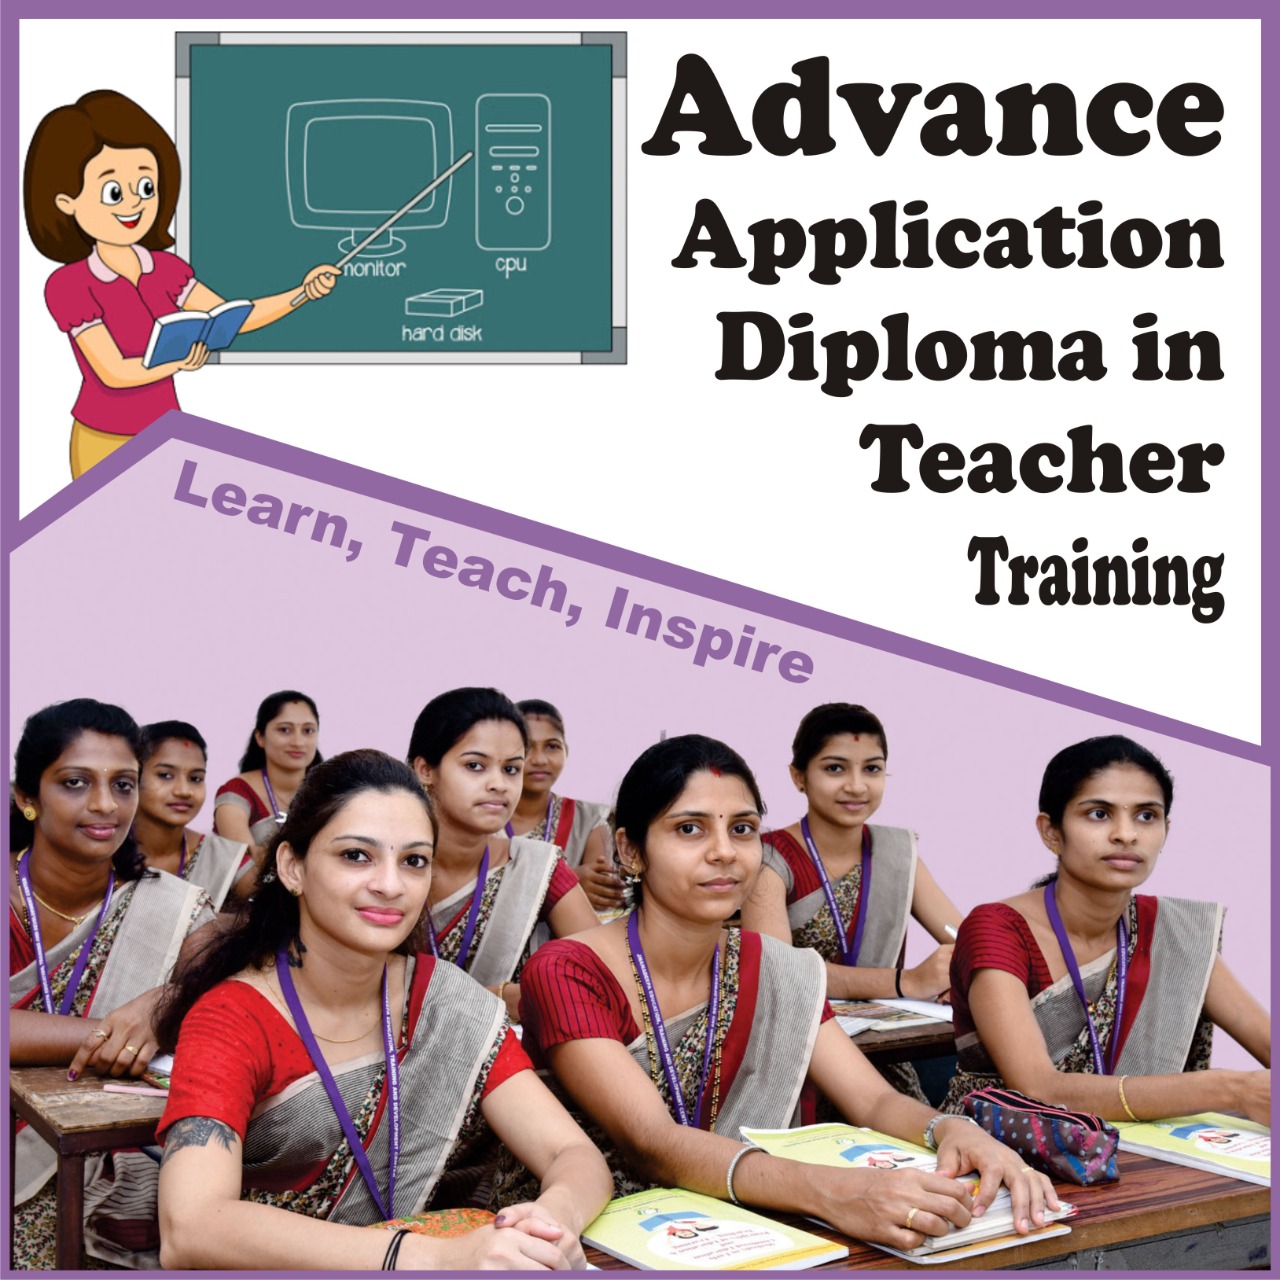 ADVANCE APPLICATION DIPLOMA IN TEACHER TRAINING 